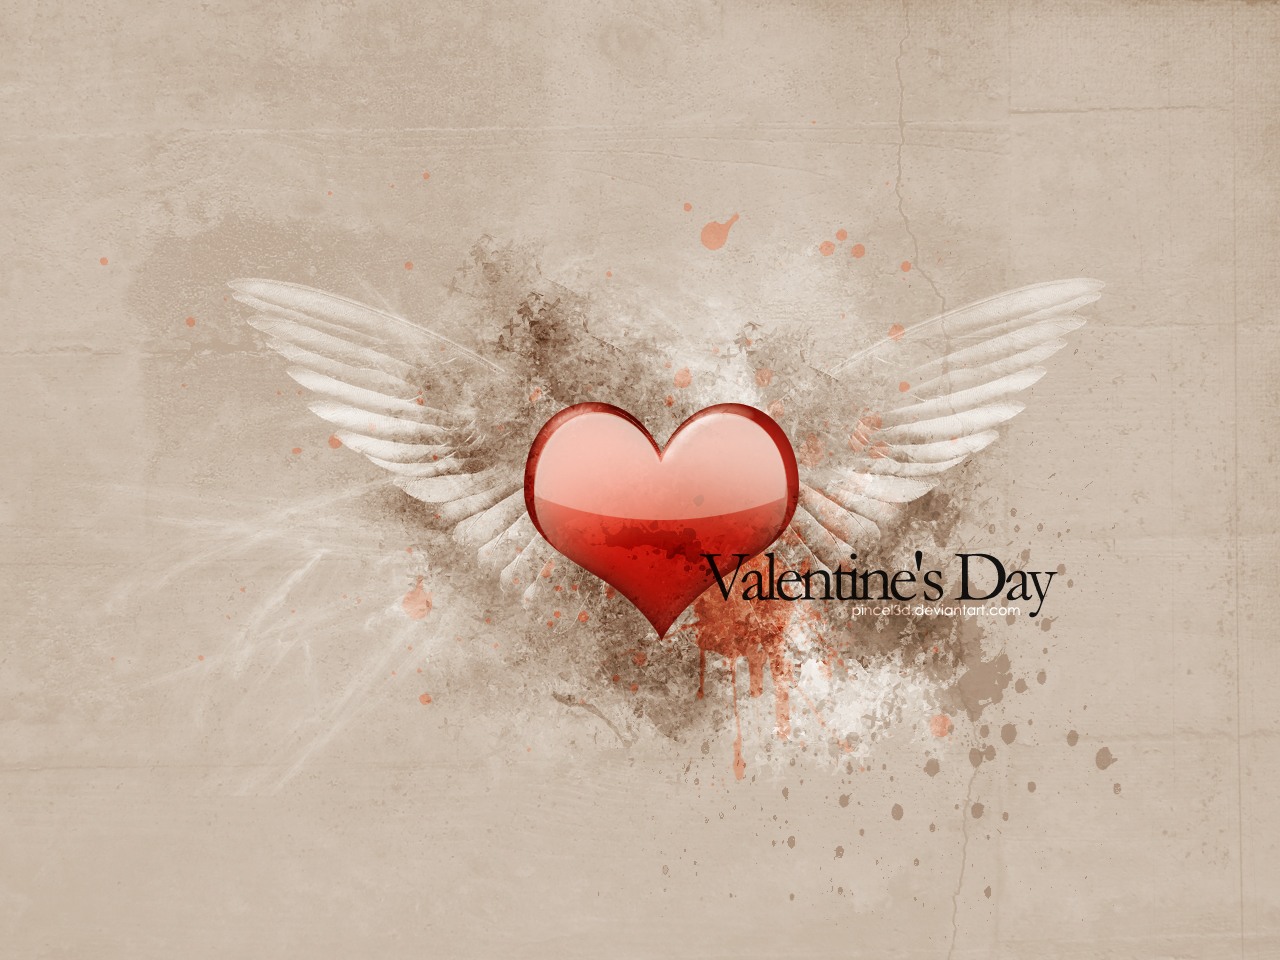 http://4.bp.blogspot.com/-Cb4ESMDuMSc/TVm4x4vJpSI/AAAAAAAAC-I/QukOG-NSLsQ/s1600/valentines-day-wallpaper.jpg